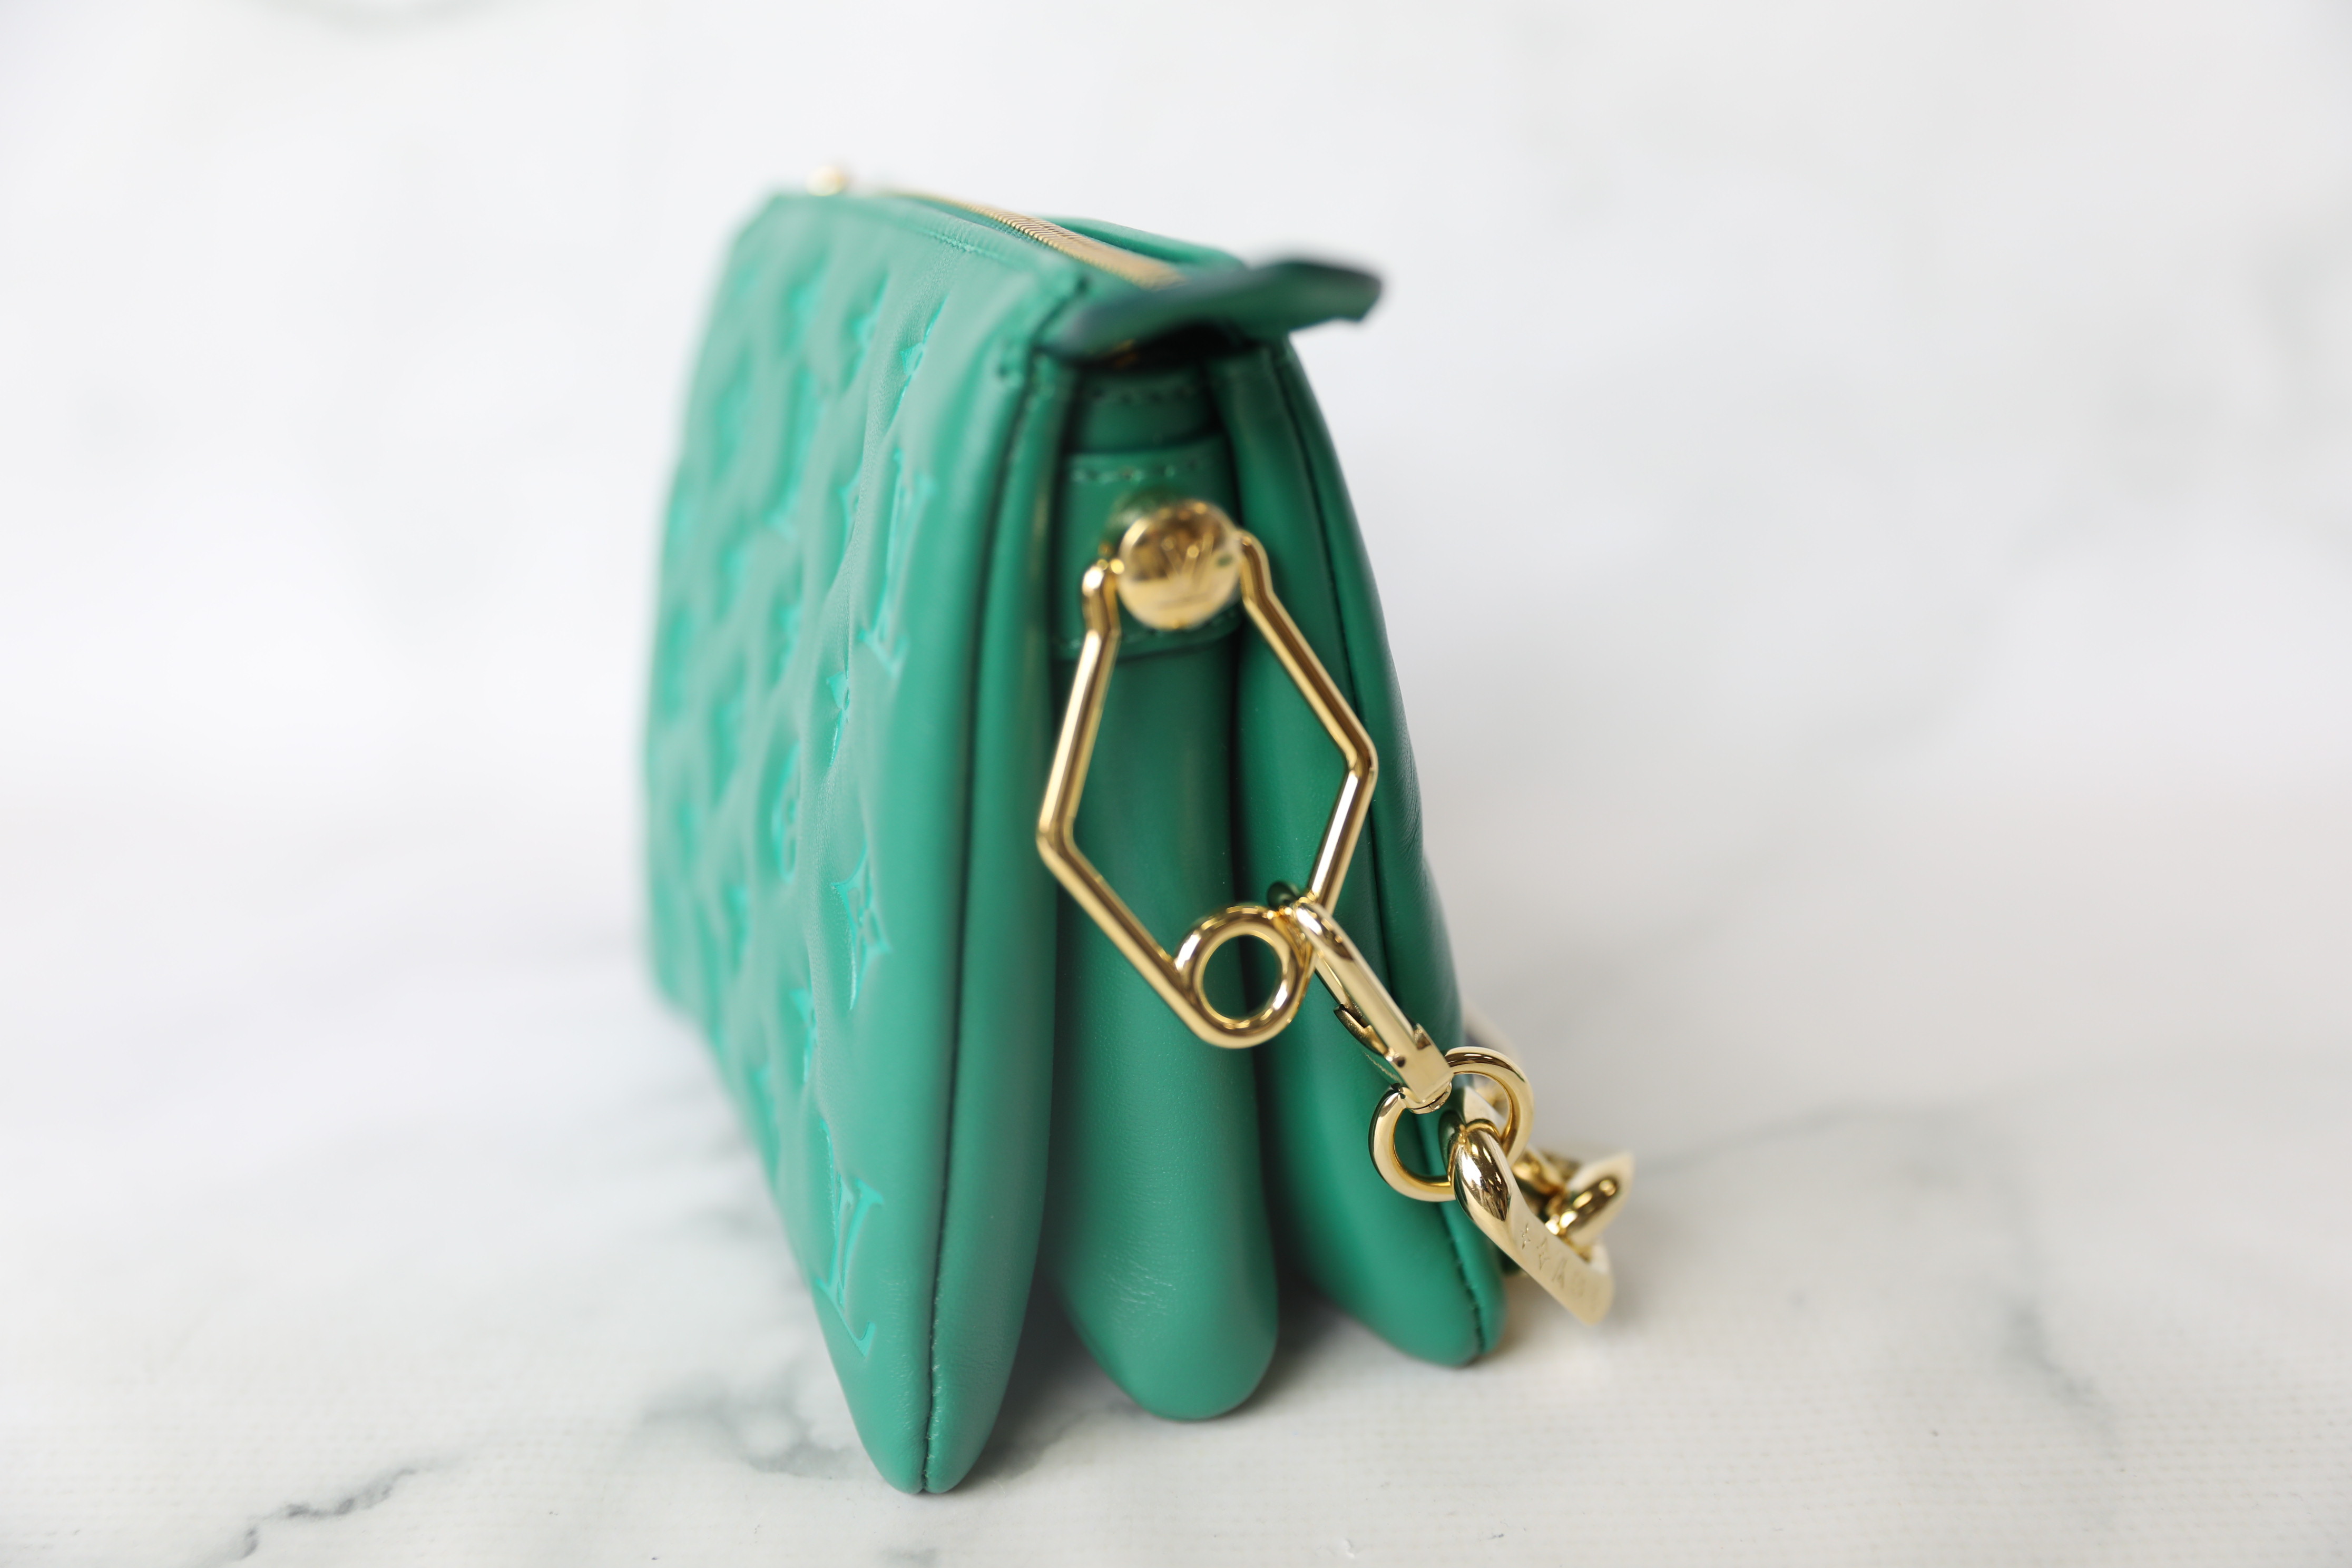 Louis Vuitton - Authenticated Coussin Handbag - Leather Green Plain for Women, Never Worn